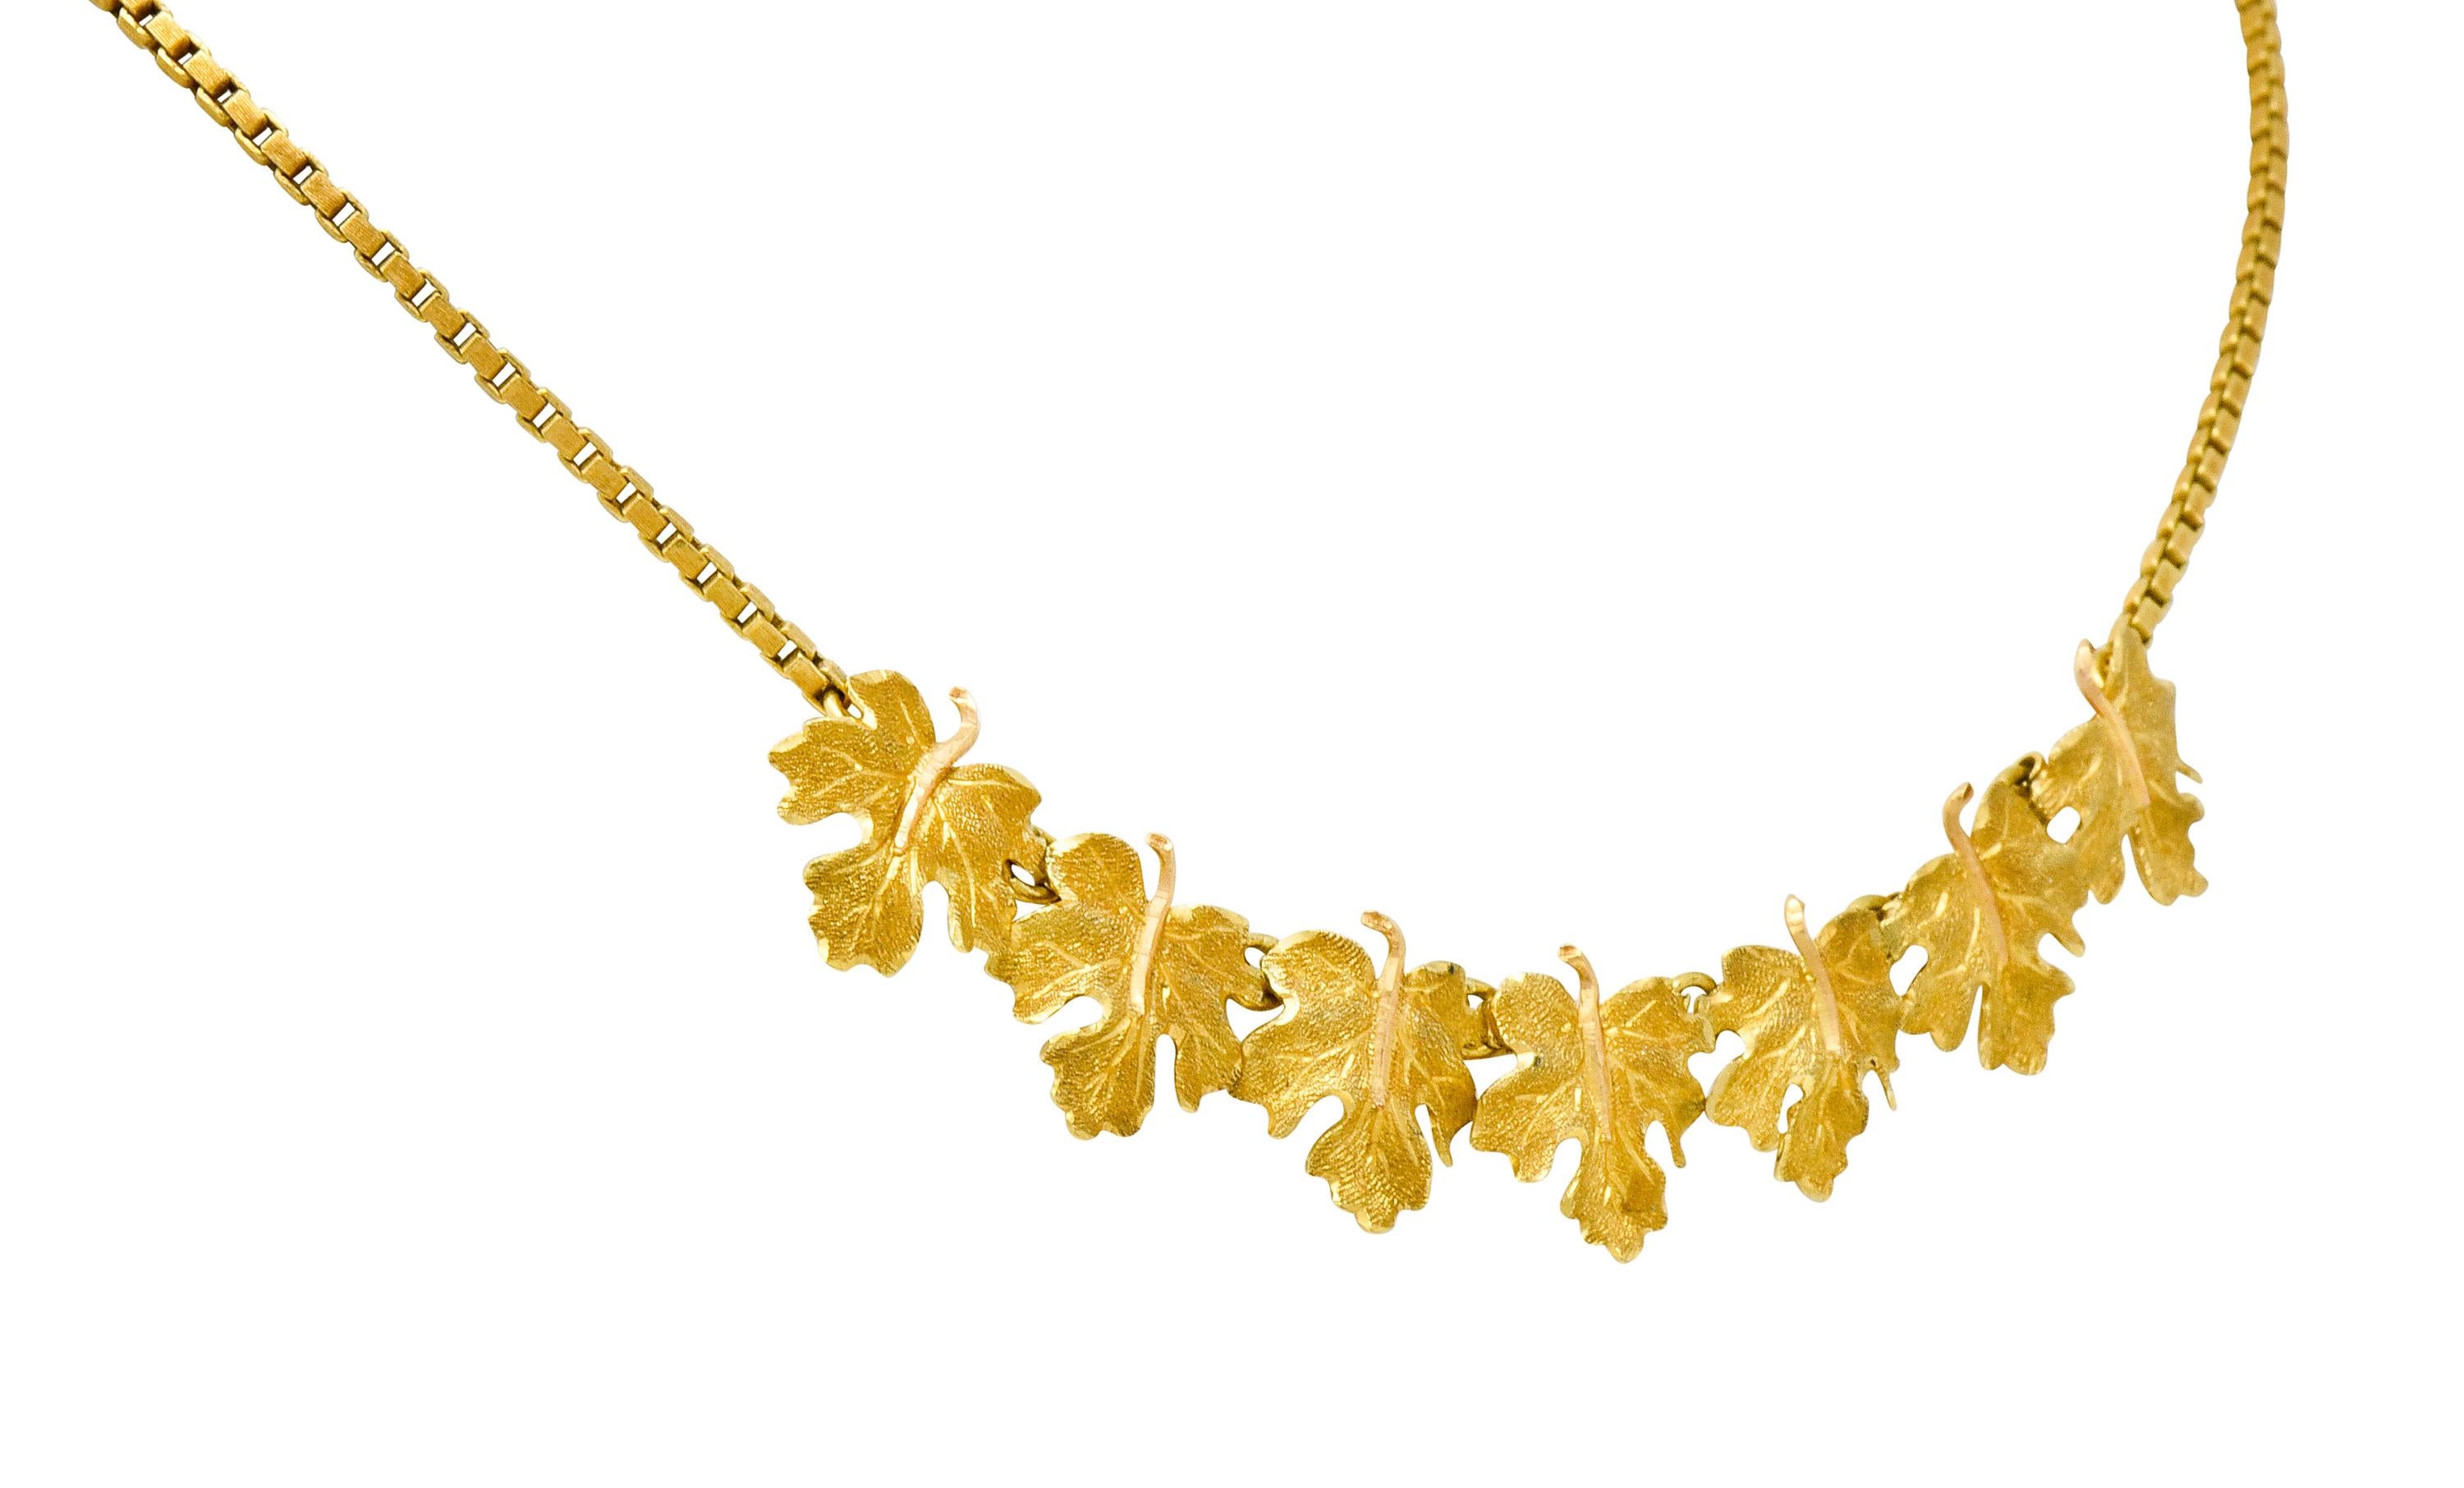 10gm gold necklace design